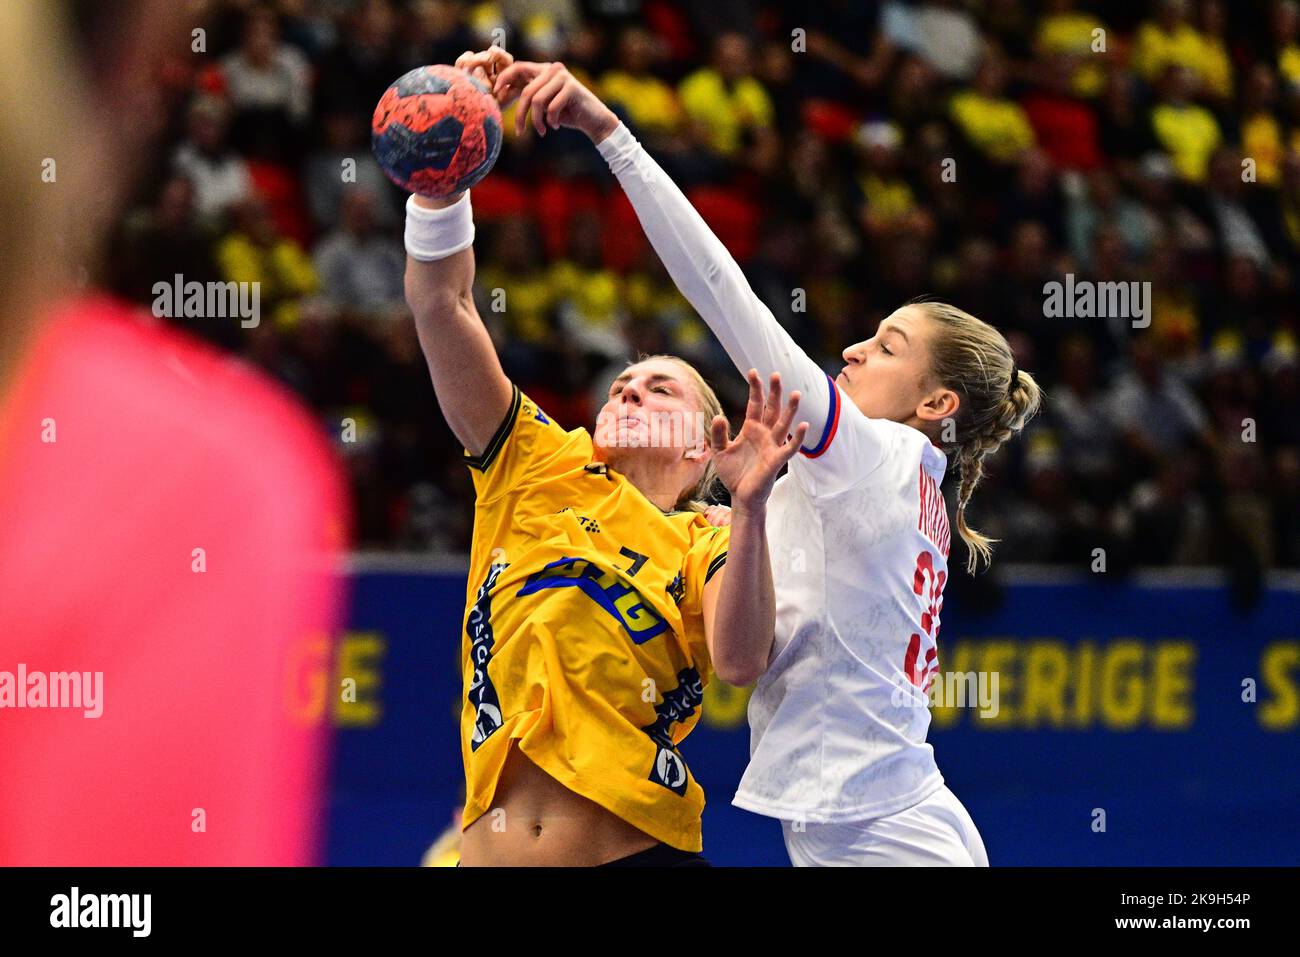 Sweden's Linn Blohm (L) and Natalie Kuxova of Czech Republic in action during the women's friendly handball match between Sweden and Czech Republic at Stock Photo